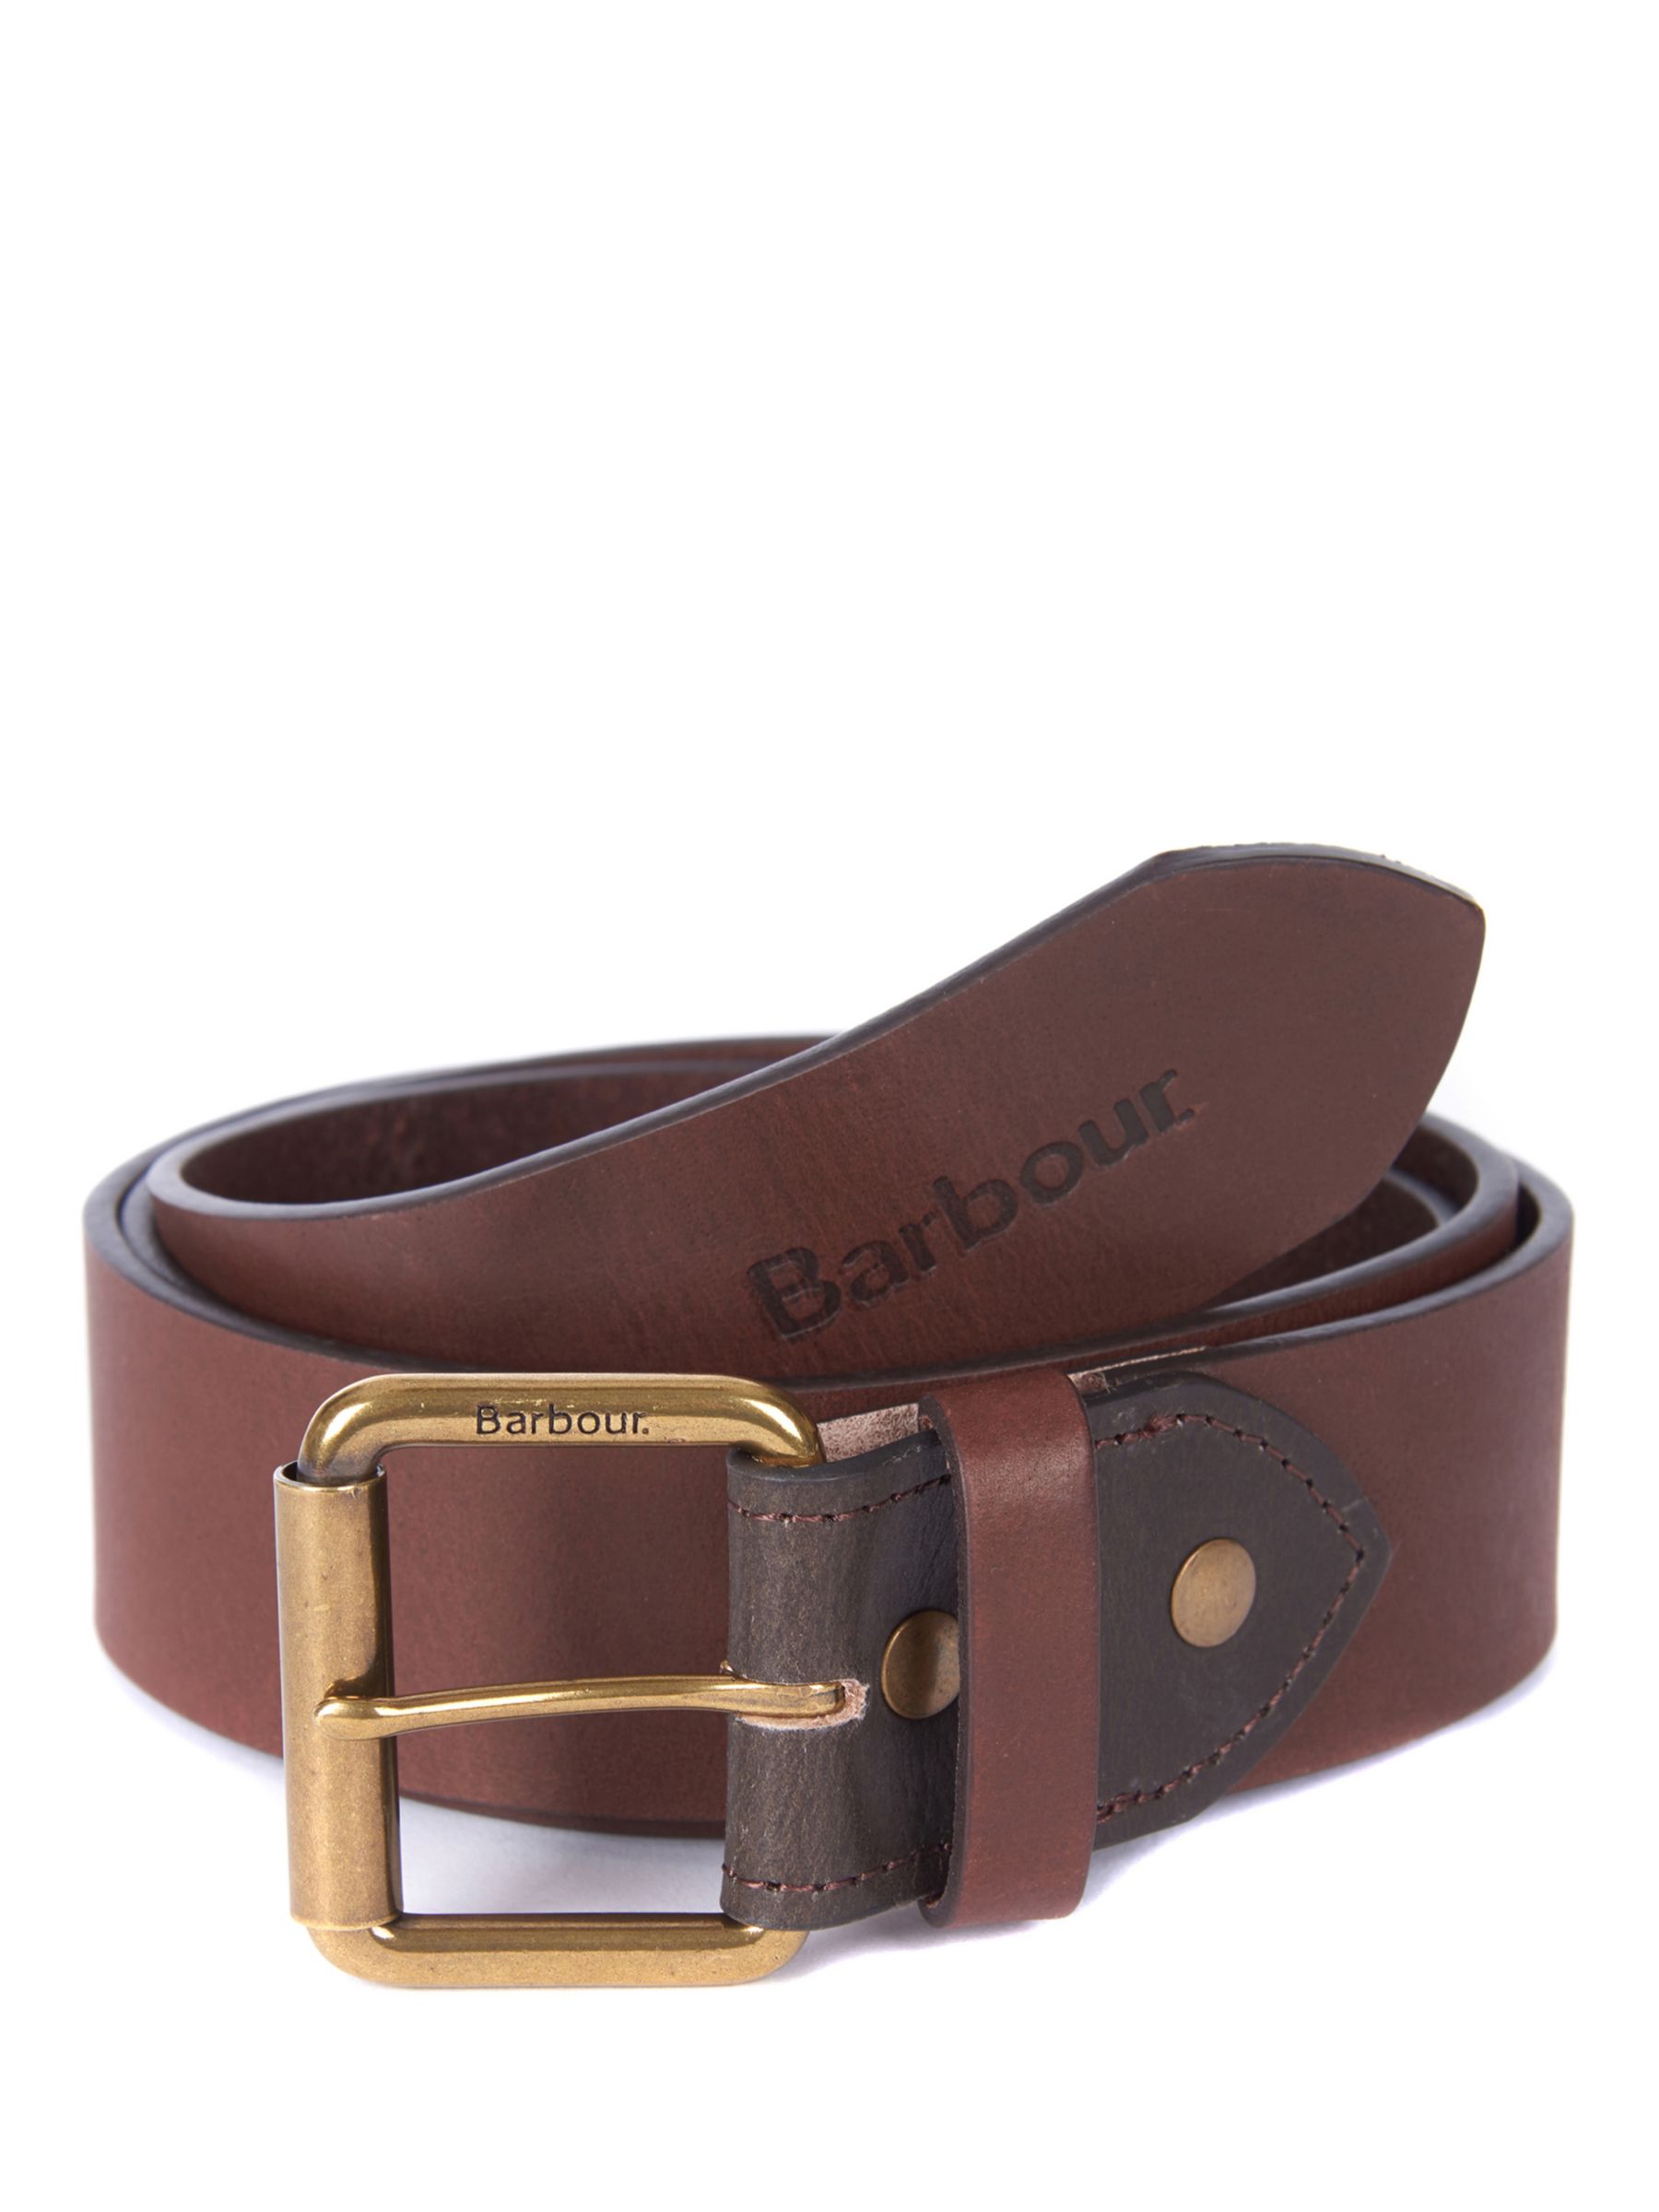 barbour belt sale